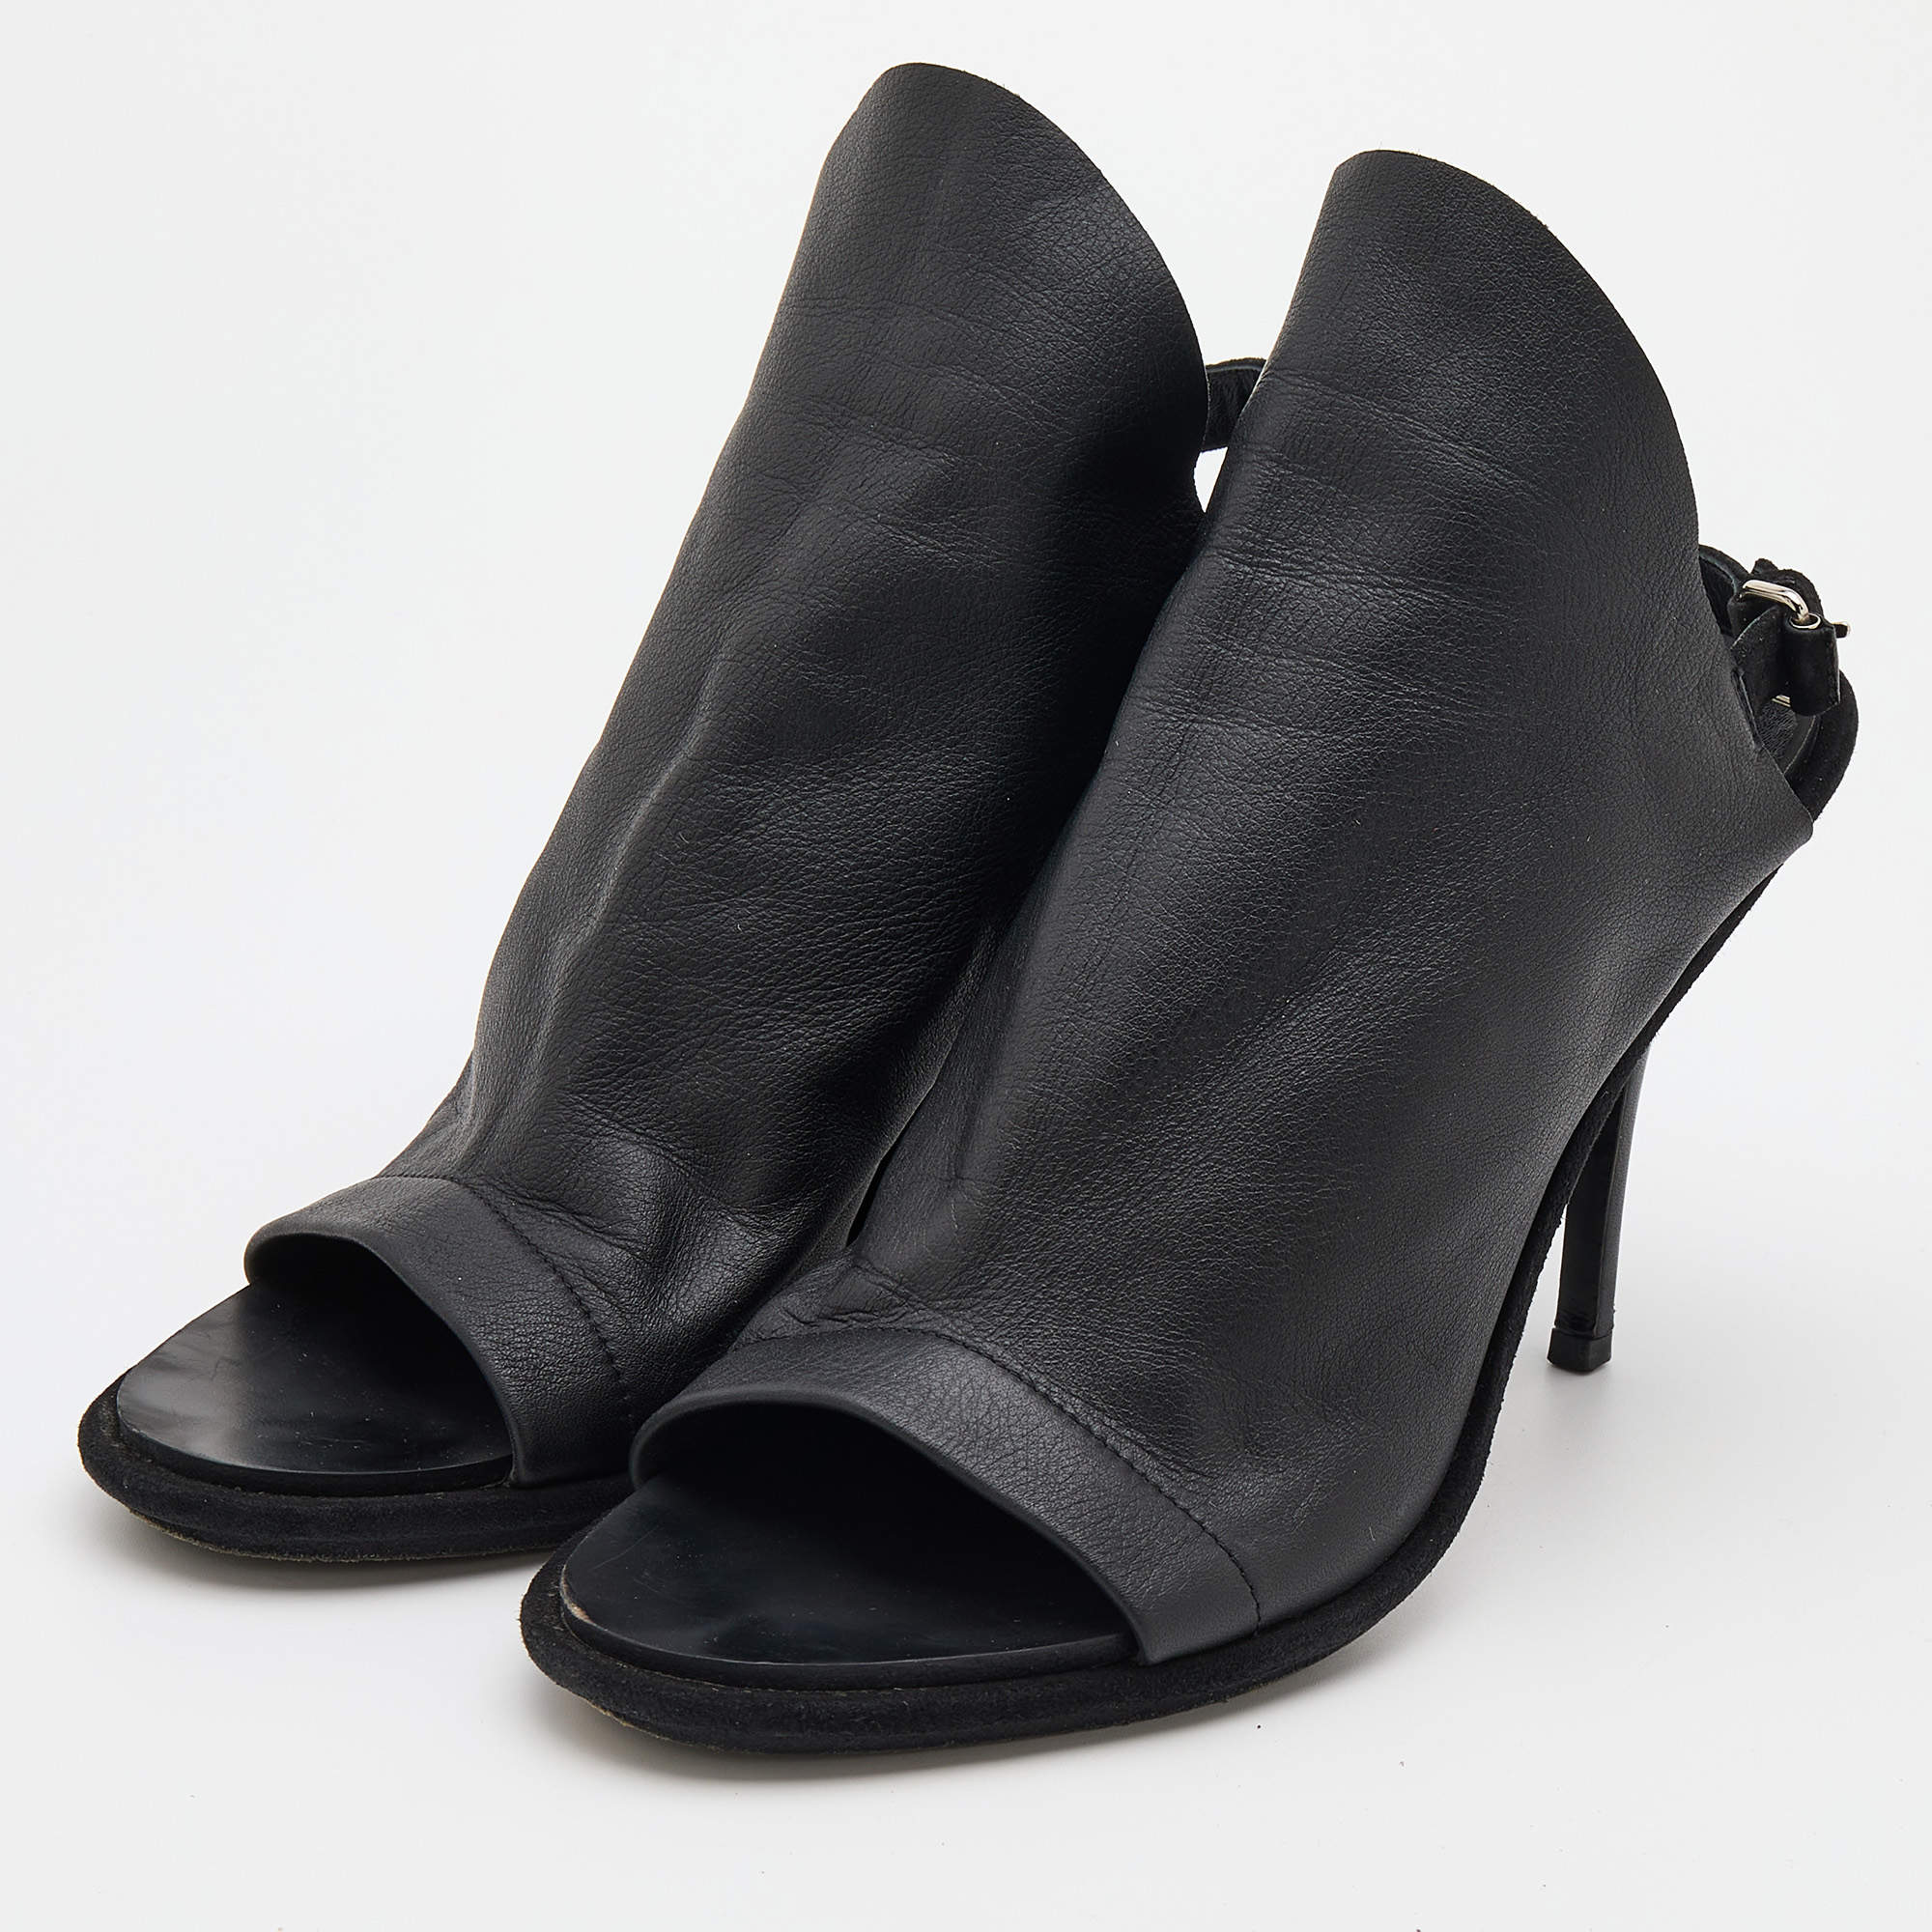 Balenciaga Womens Suede Open Toe Glove Slingback Heels Black White Siz -  Shop Linda's Stuff